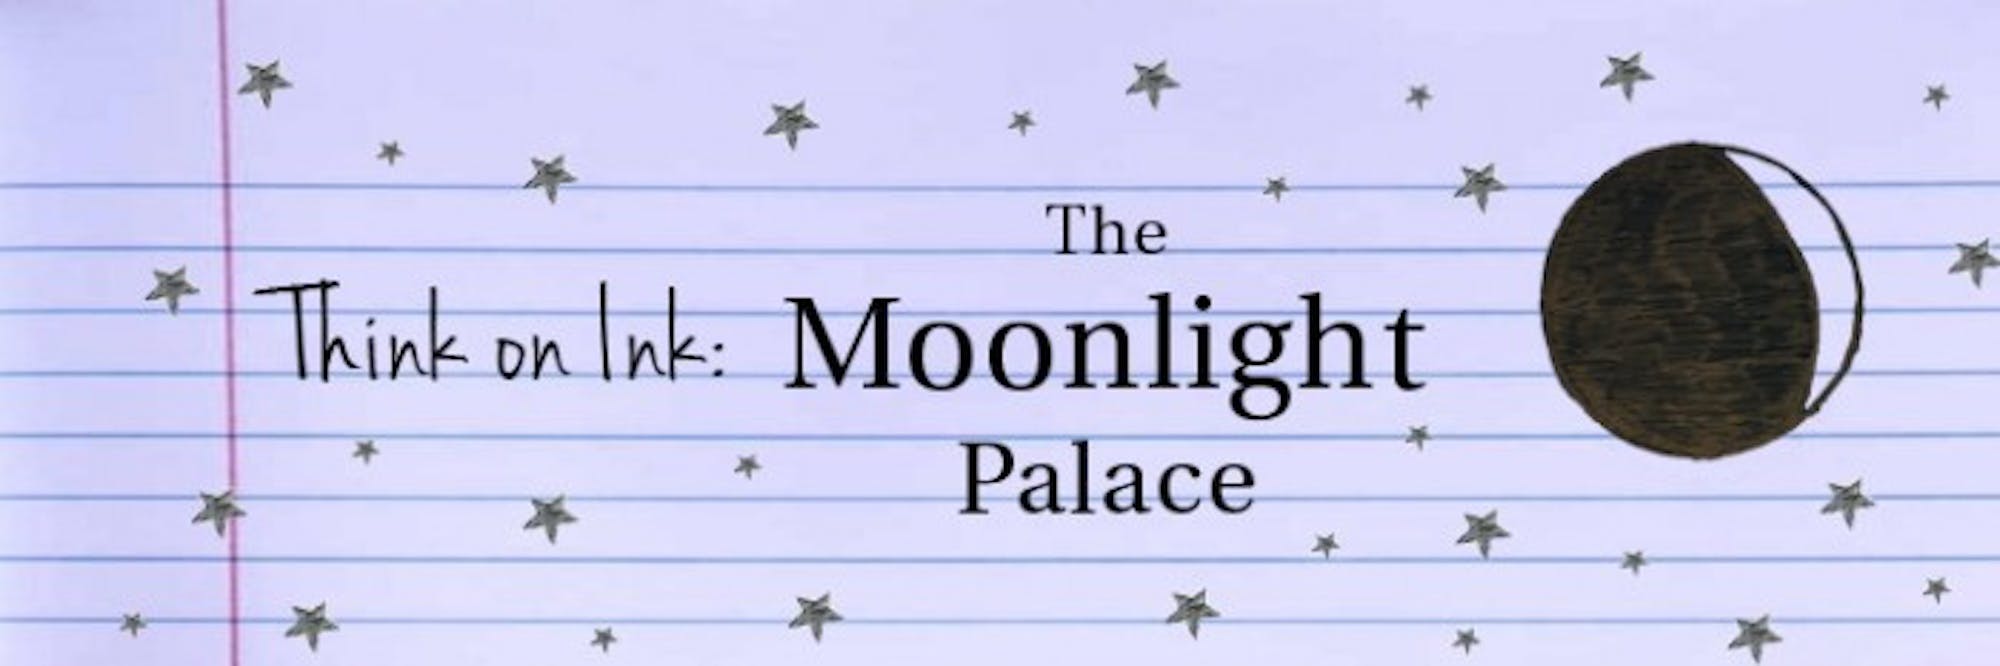 MoonlightPalace_WEB